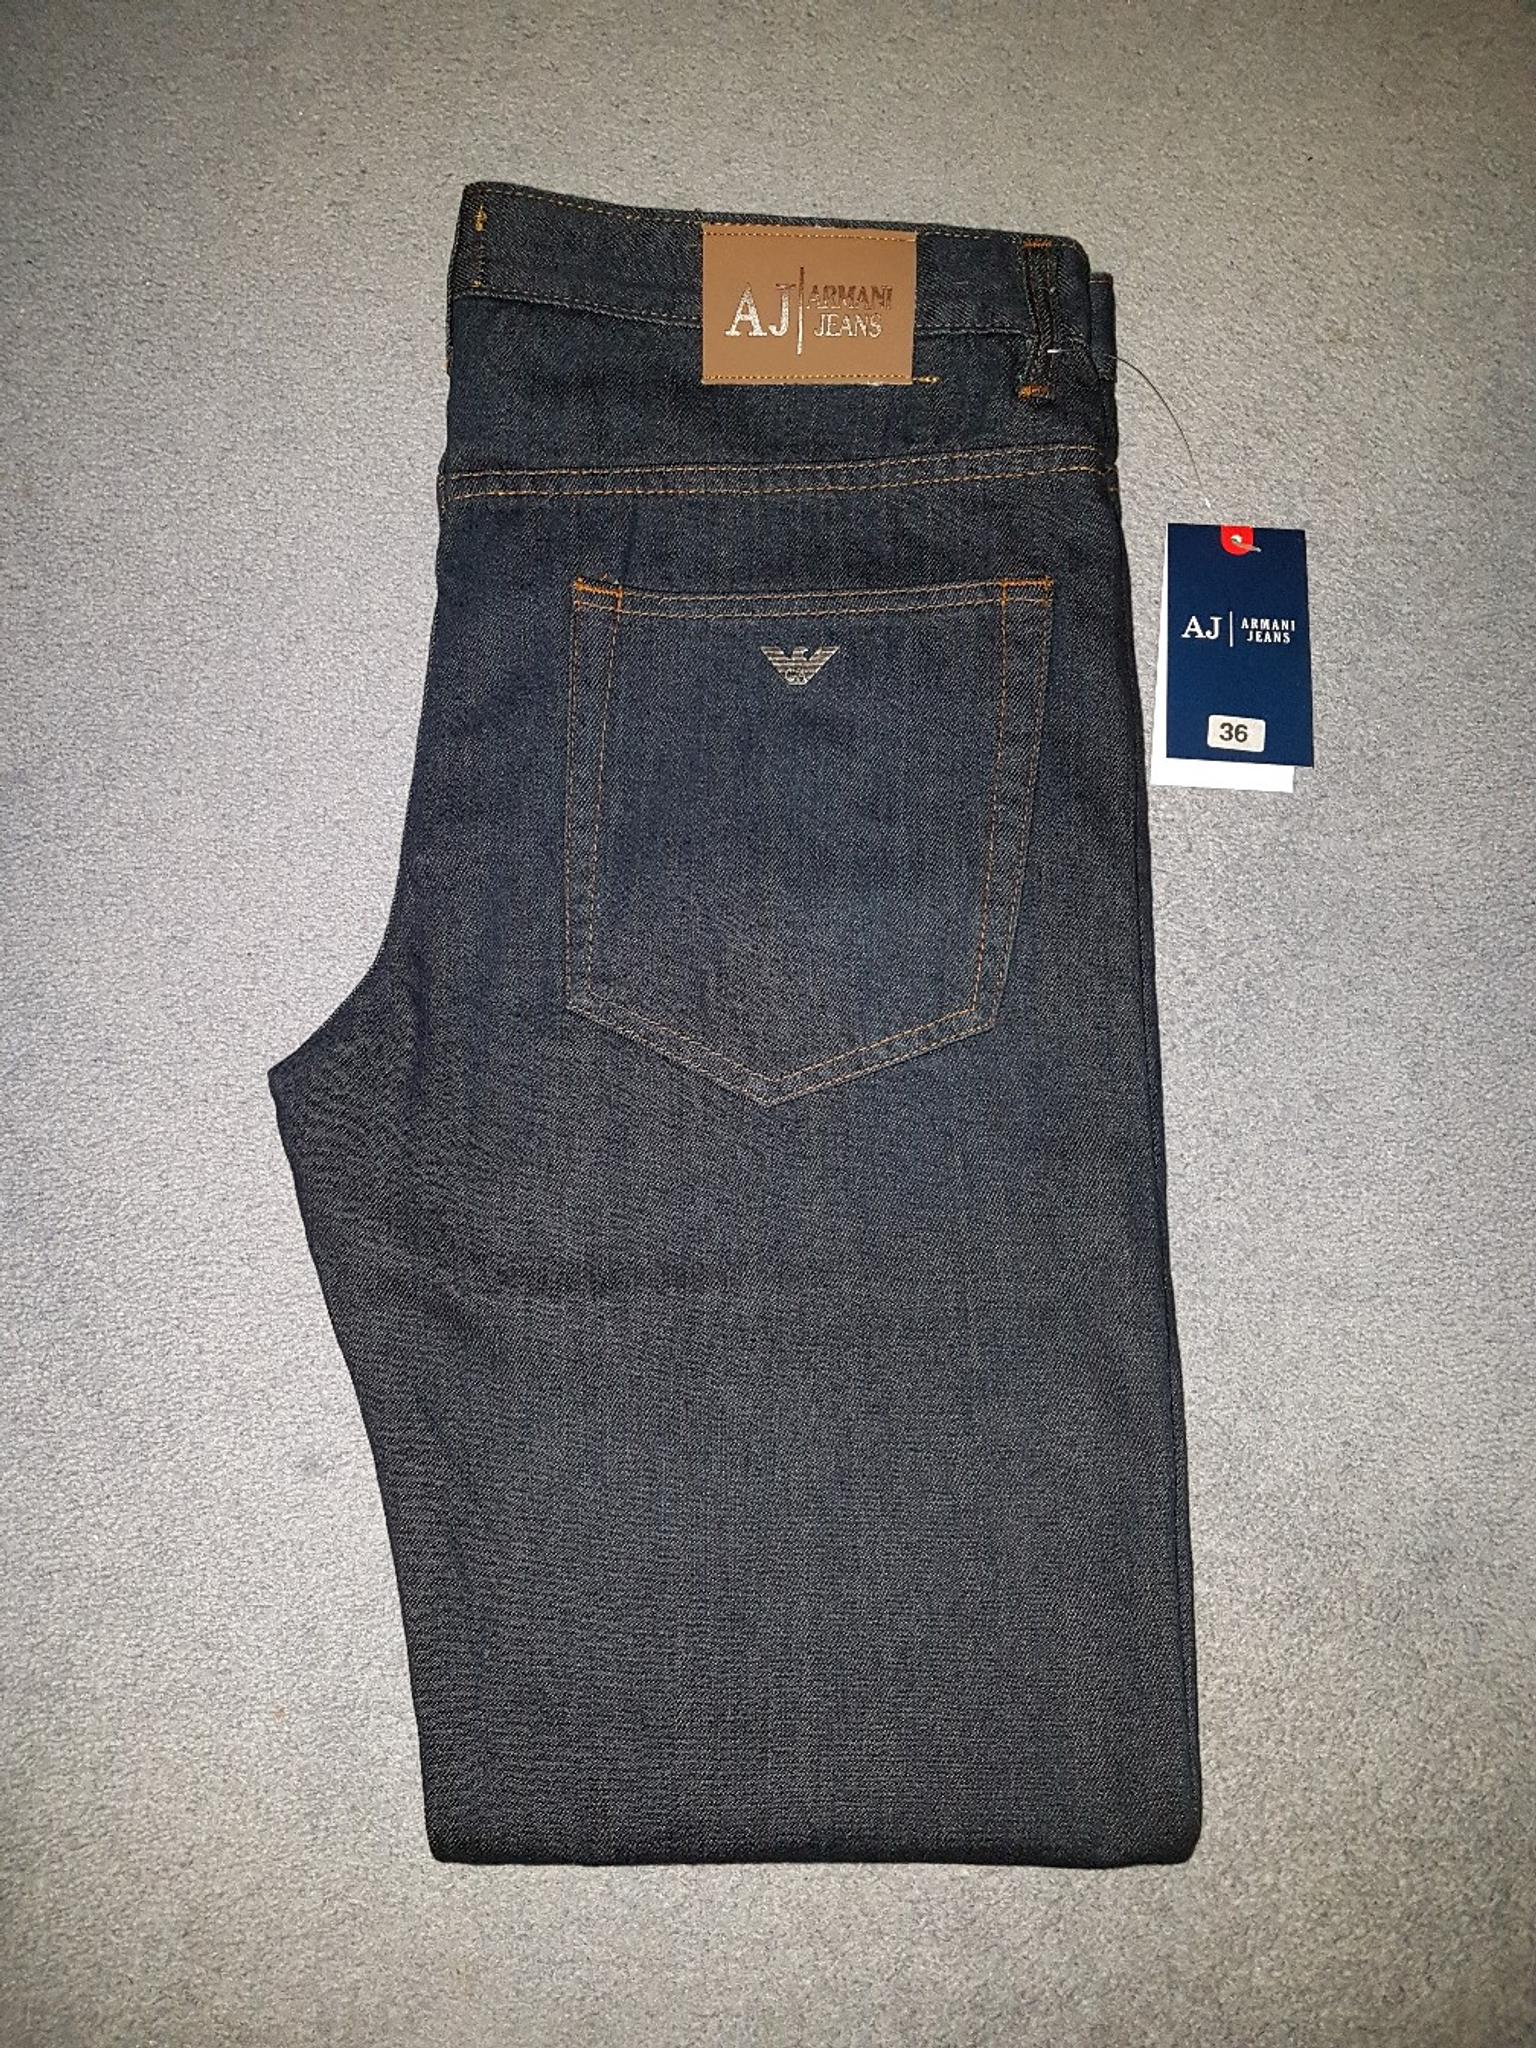 armani jeans 36 waist 32 leg